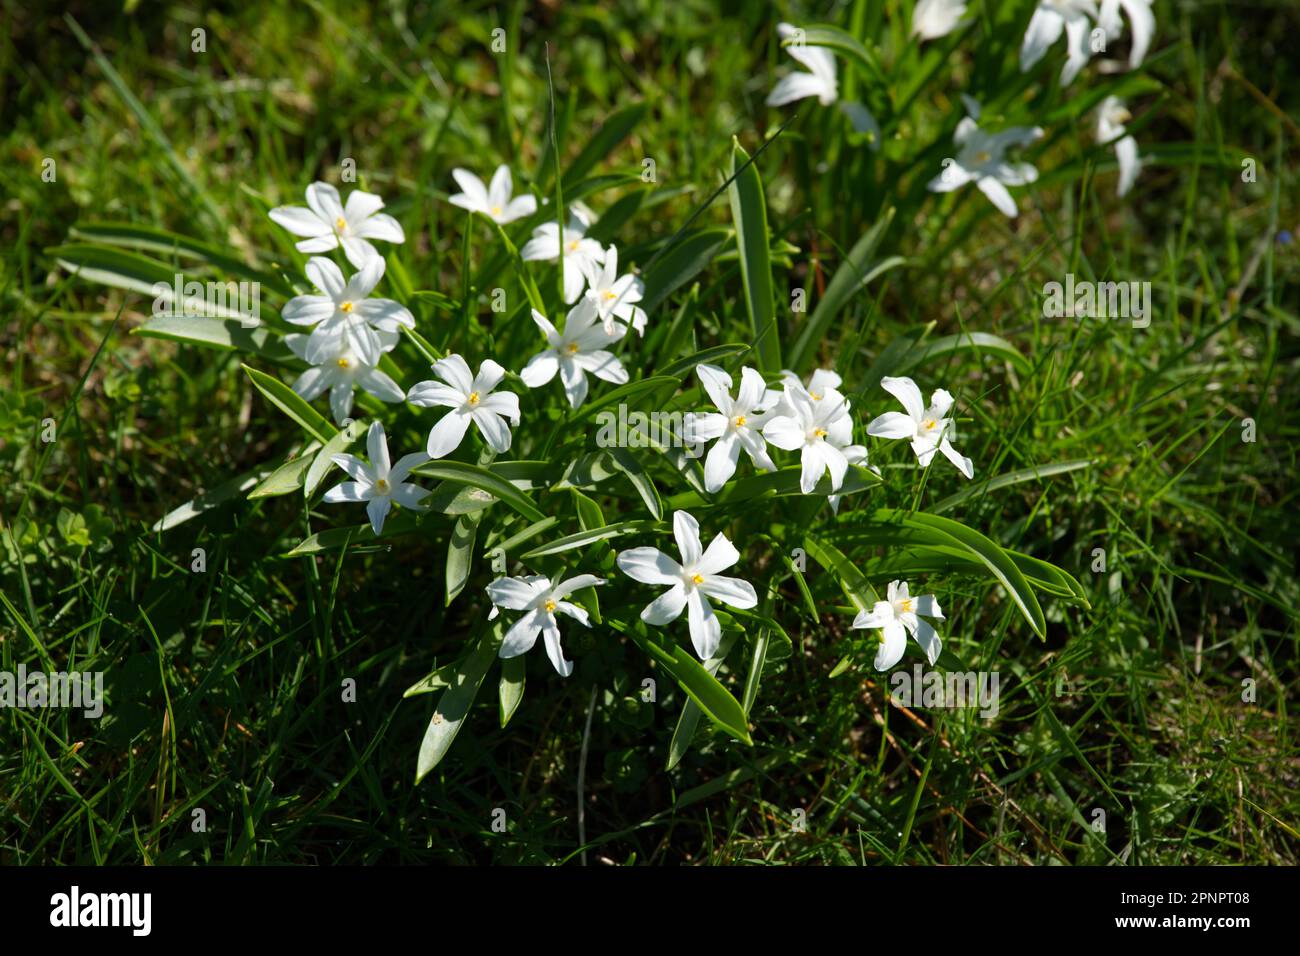 White spring flowers of chiondoxa Scilla luciliae (Gigantea Group) 'Alba' naturalised in grass in UK garden April Stock Photo